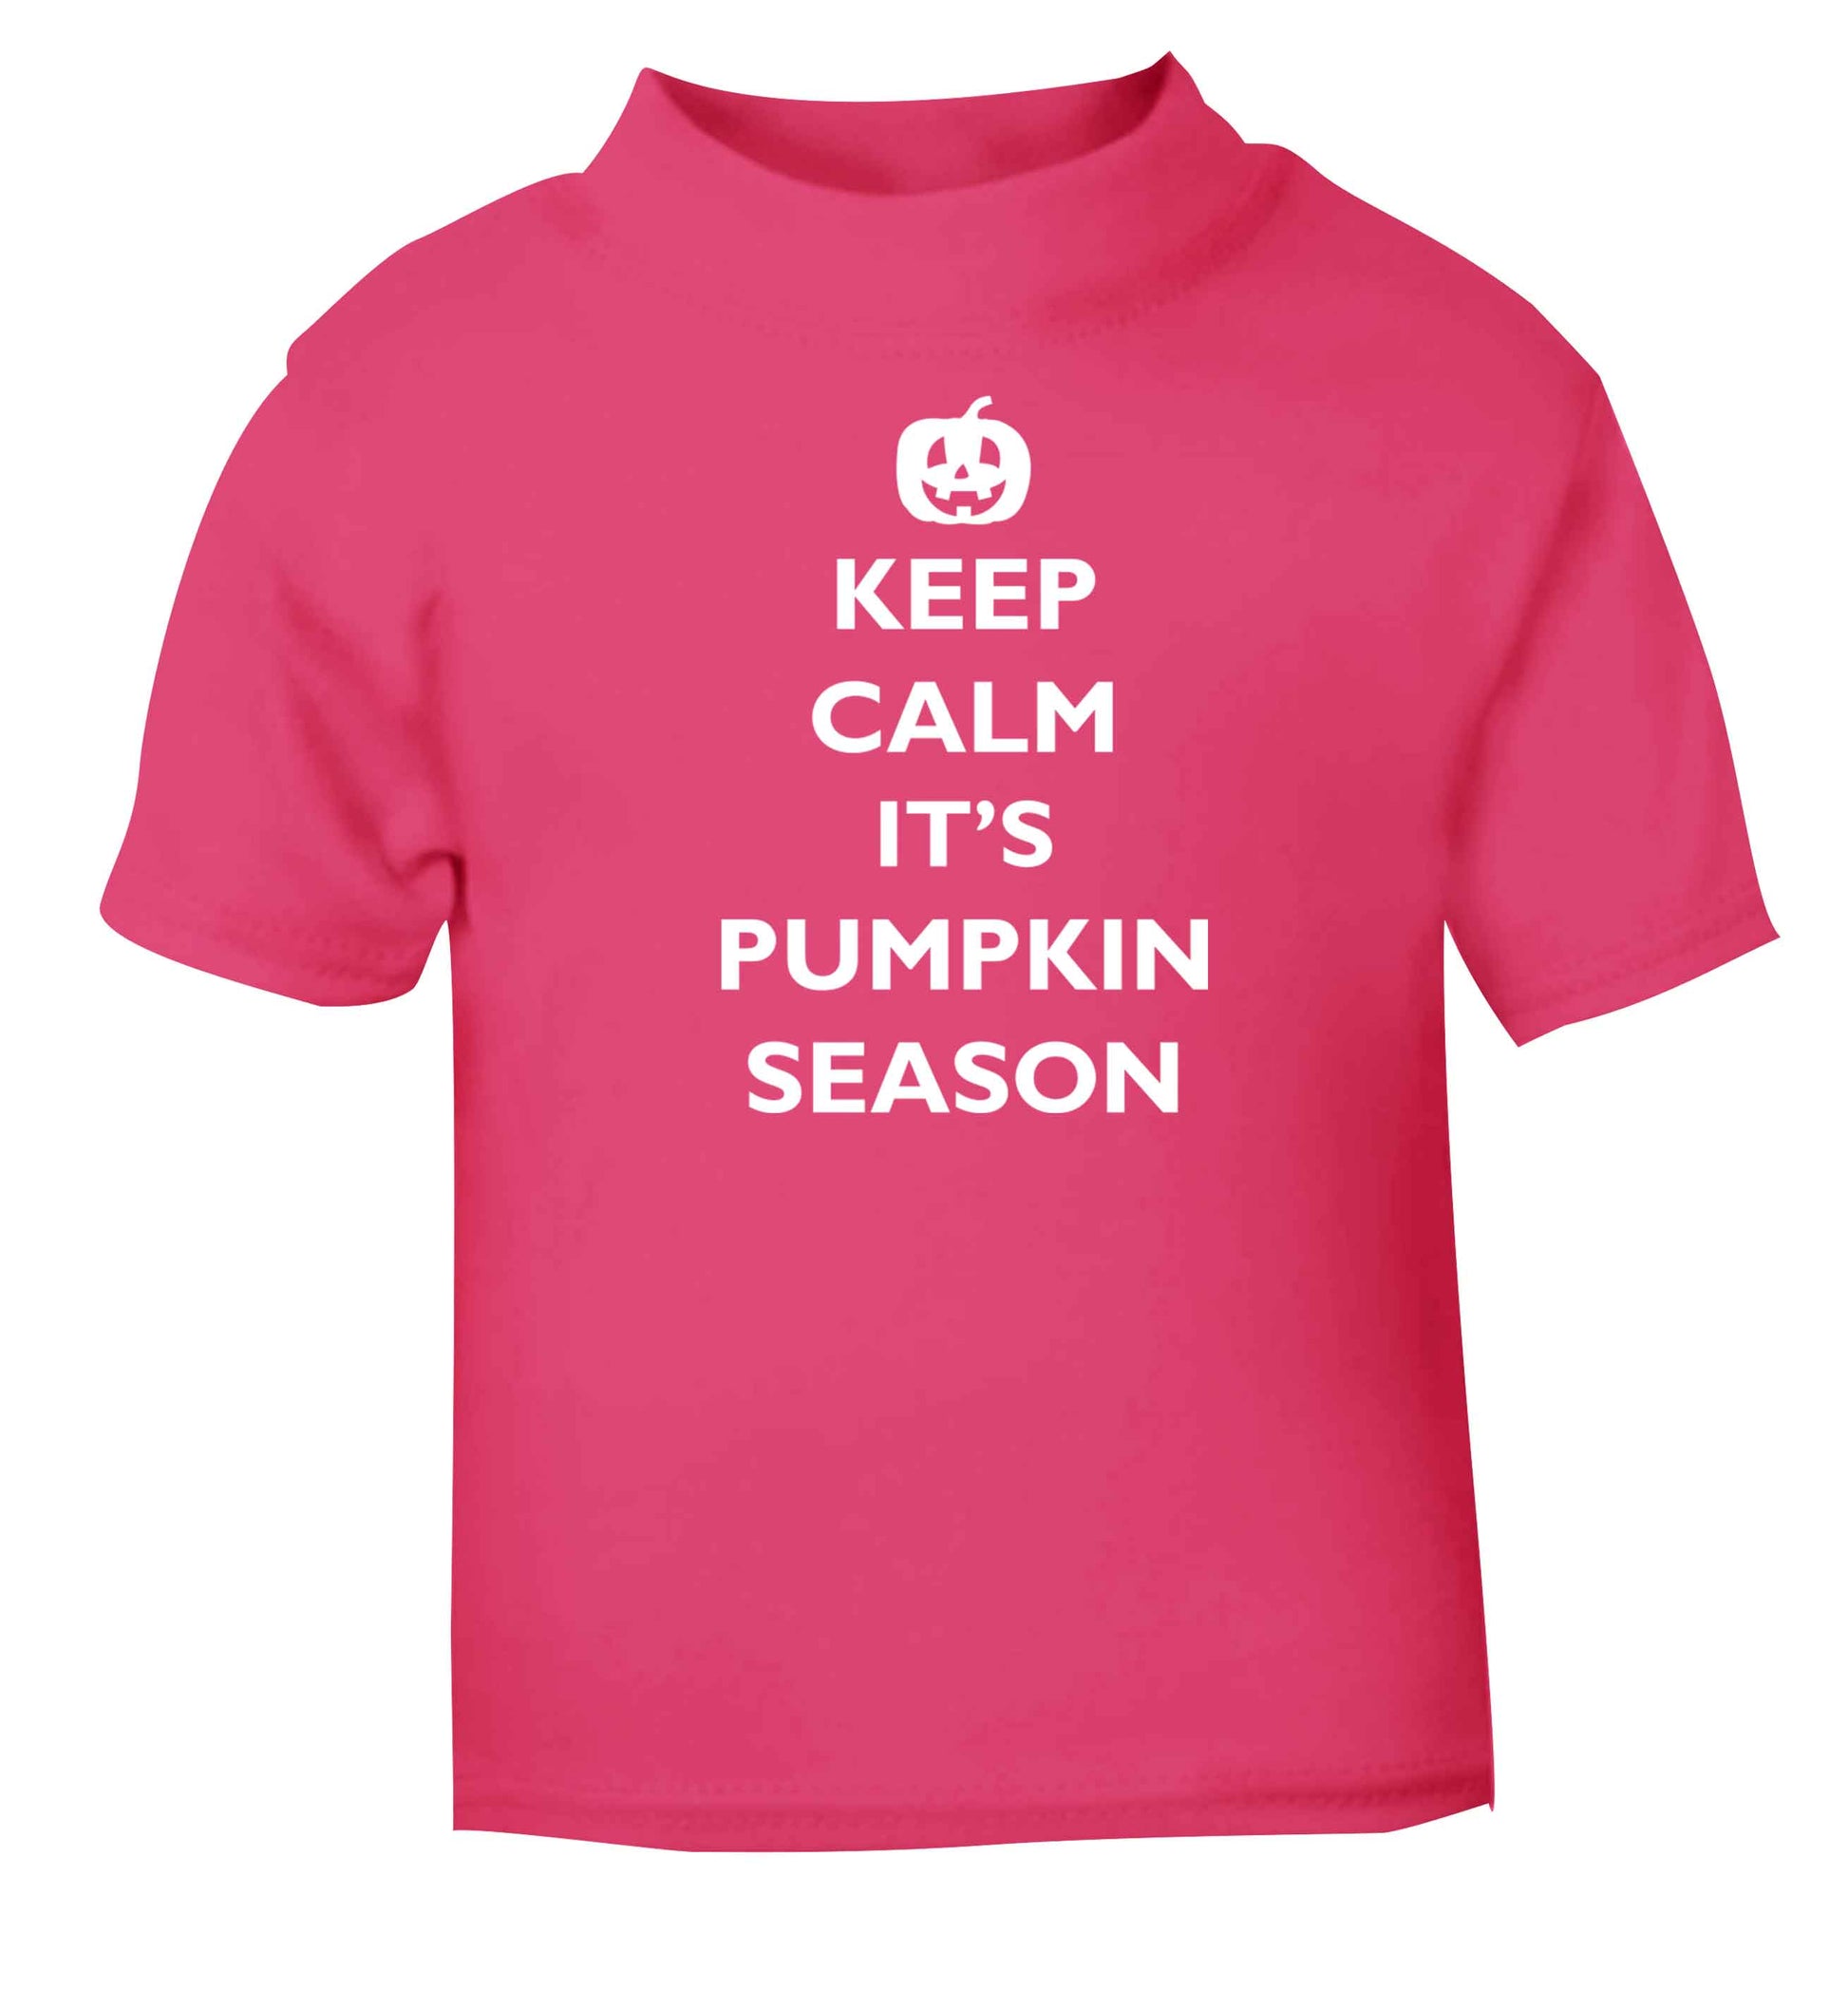 Calm Pumpkin Season pink baby toddler Tshirt 2 Years